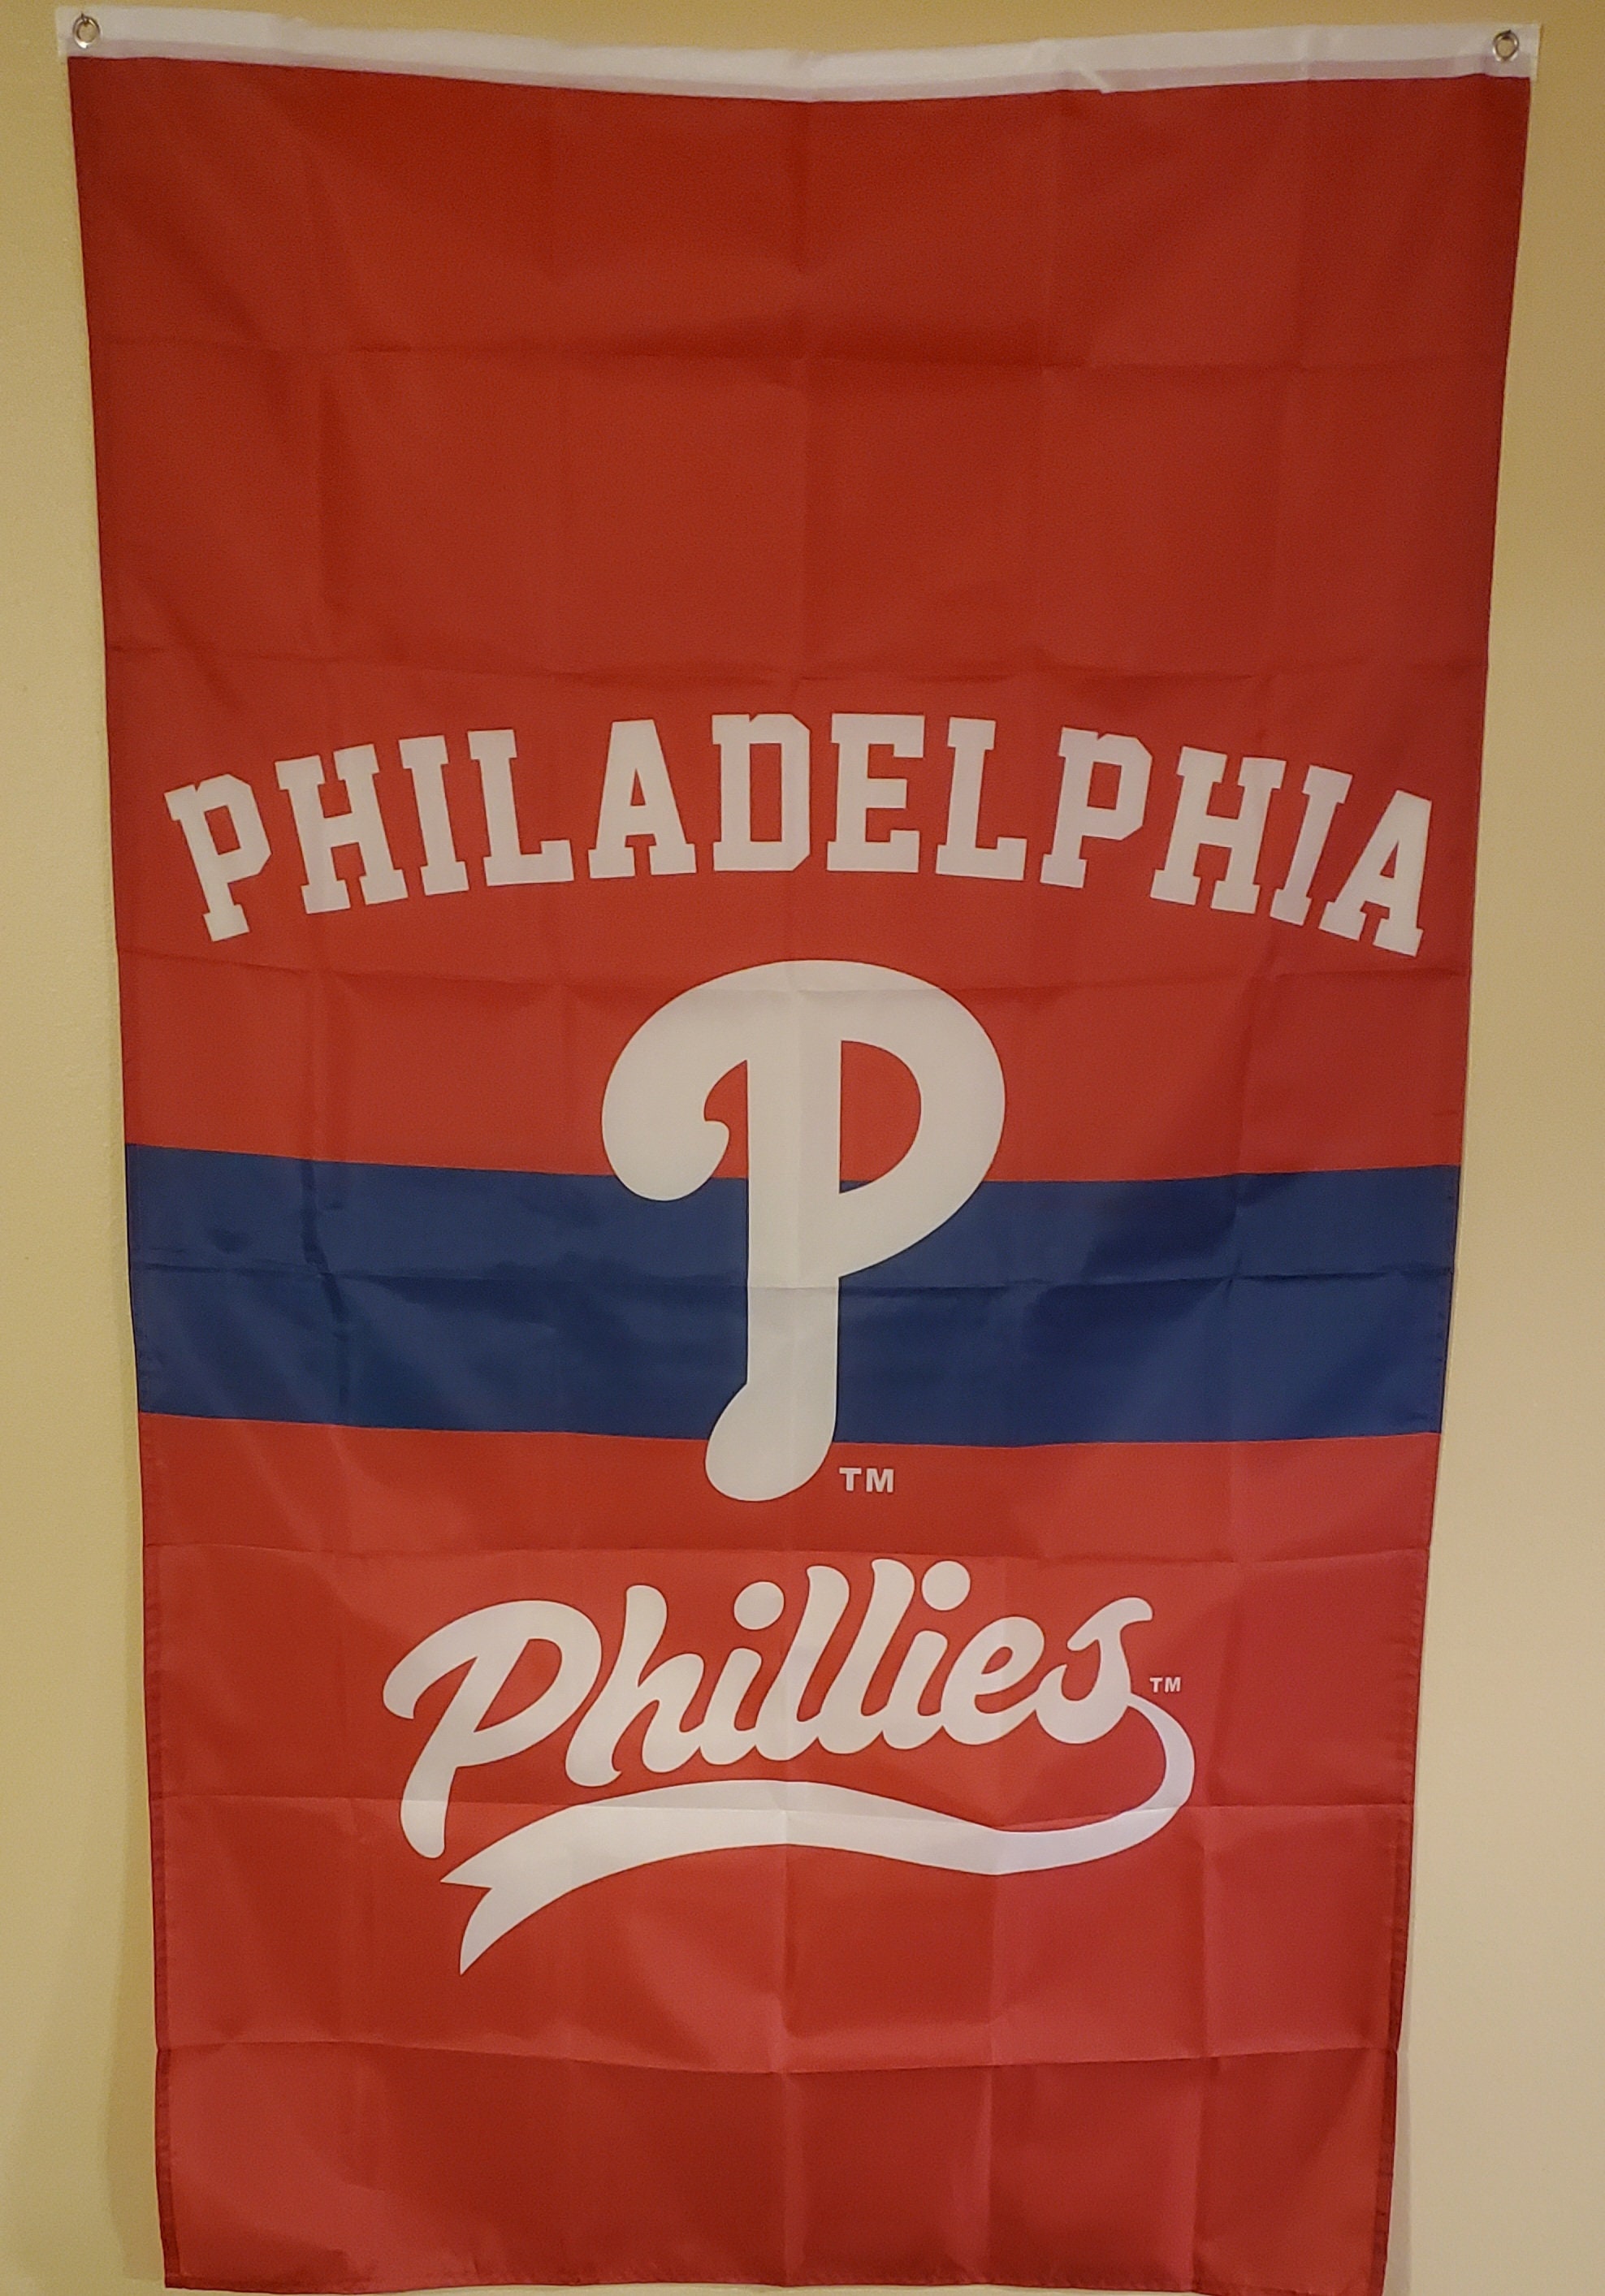 Kids Philadelphia Phillies Tee, Red October Phillies Shirt, Youth shir –  The Dimes Club